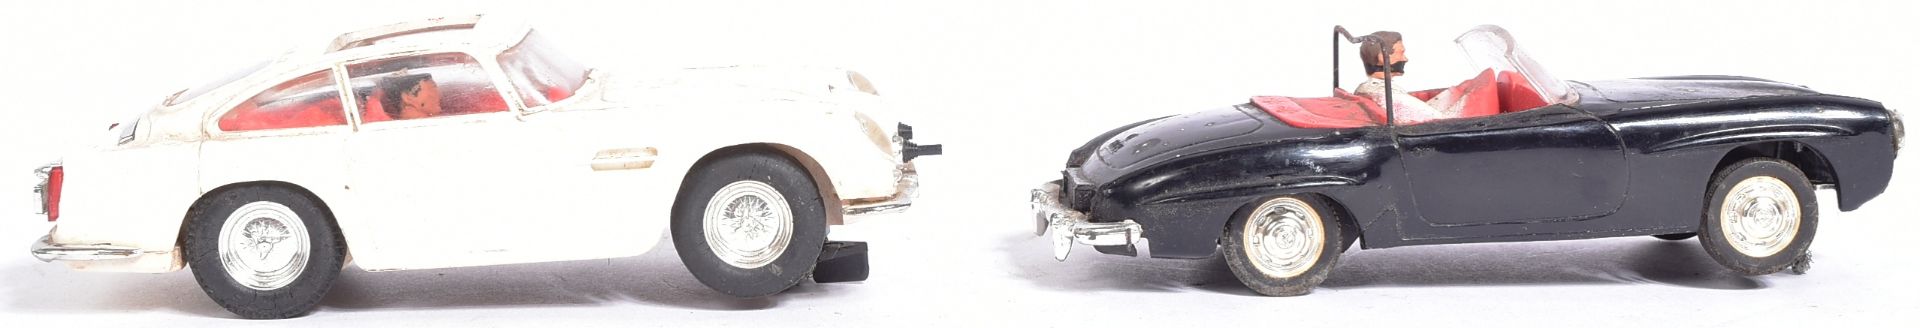 SCALEXTRIC - X2 VINTAGE TRIANG SCALEXTRIC JAMES BOND CARS - Bild 4 aus 5